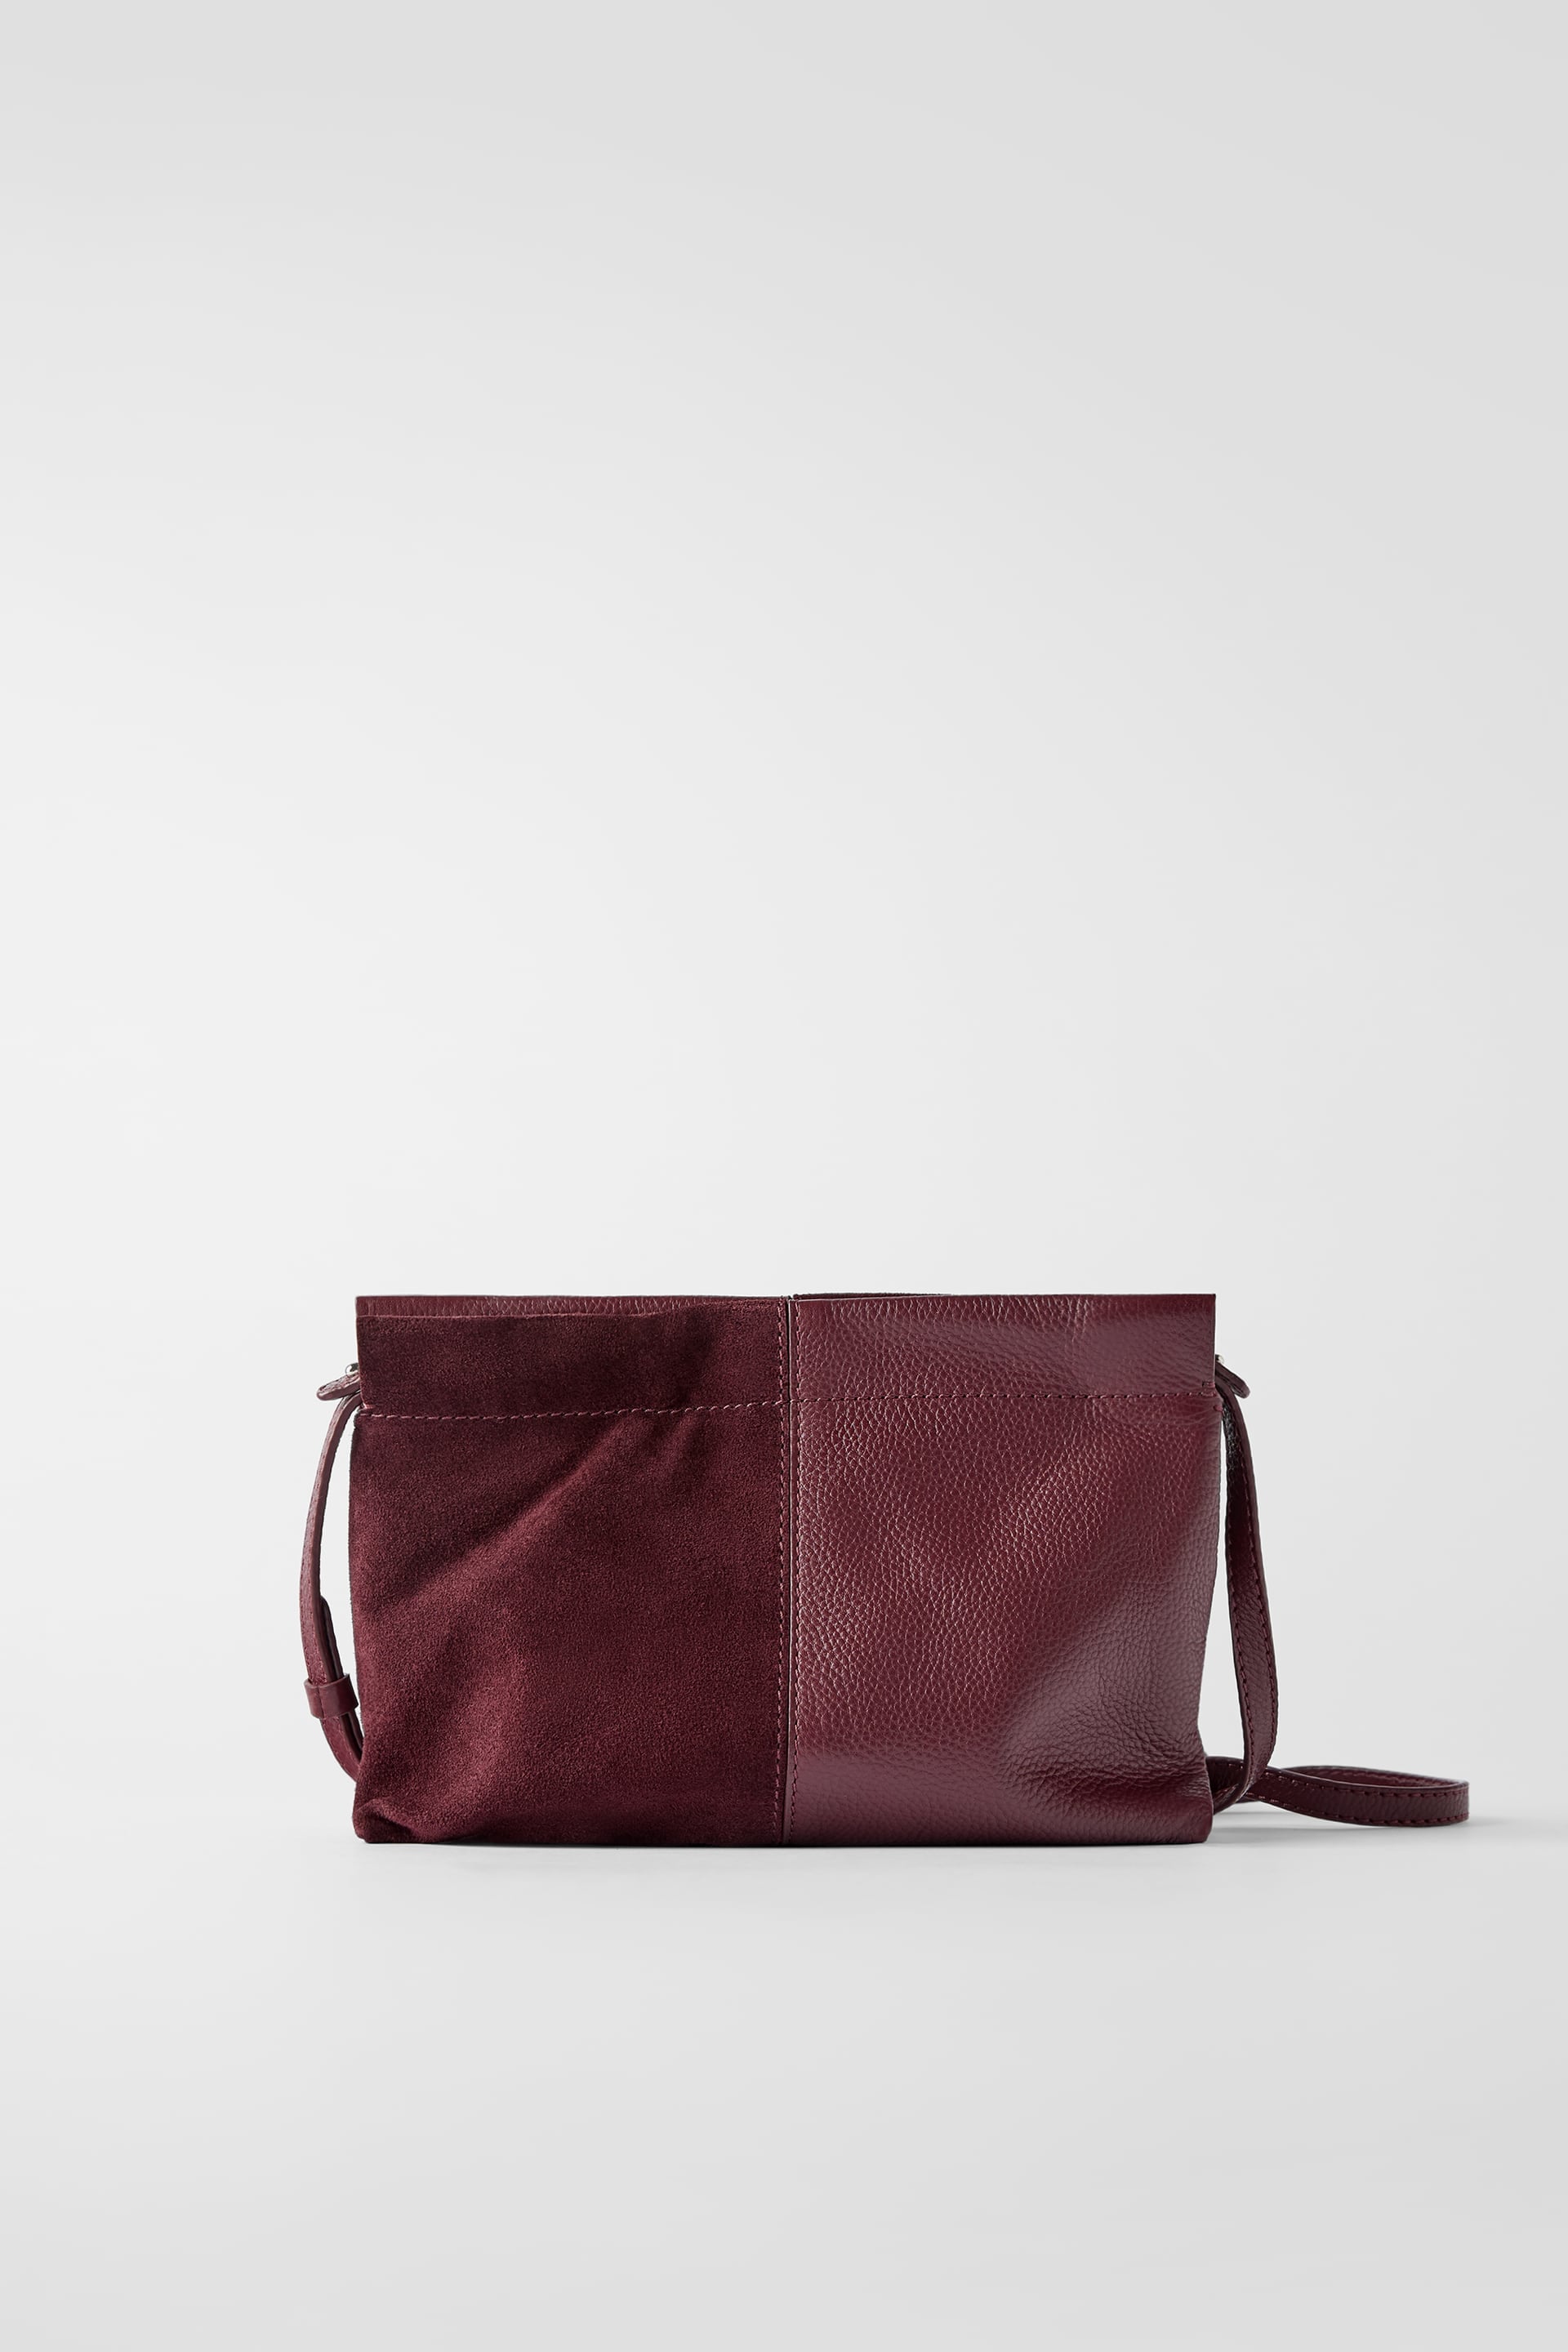 ZARA Mini Shoulder Bag WOOD Clutch Box ROUND Chain Strap HandBag NWT  2614/004 | eBay